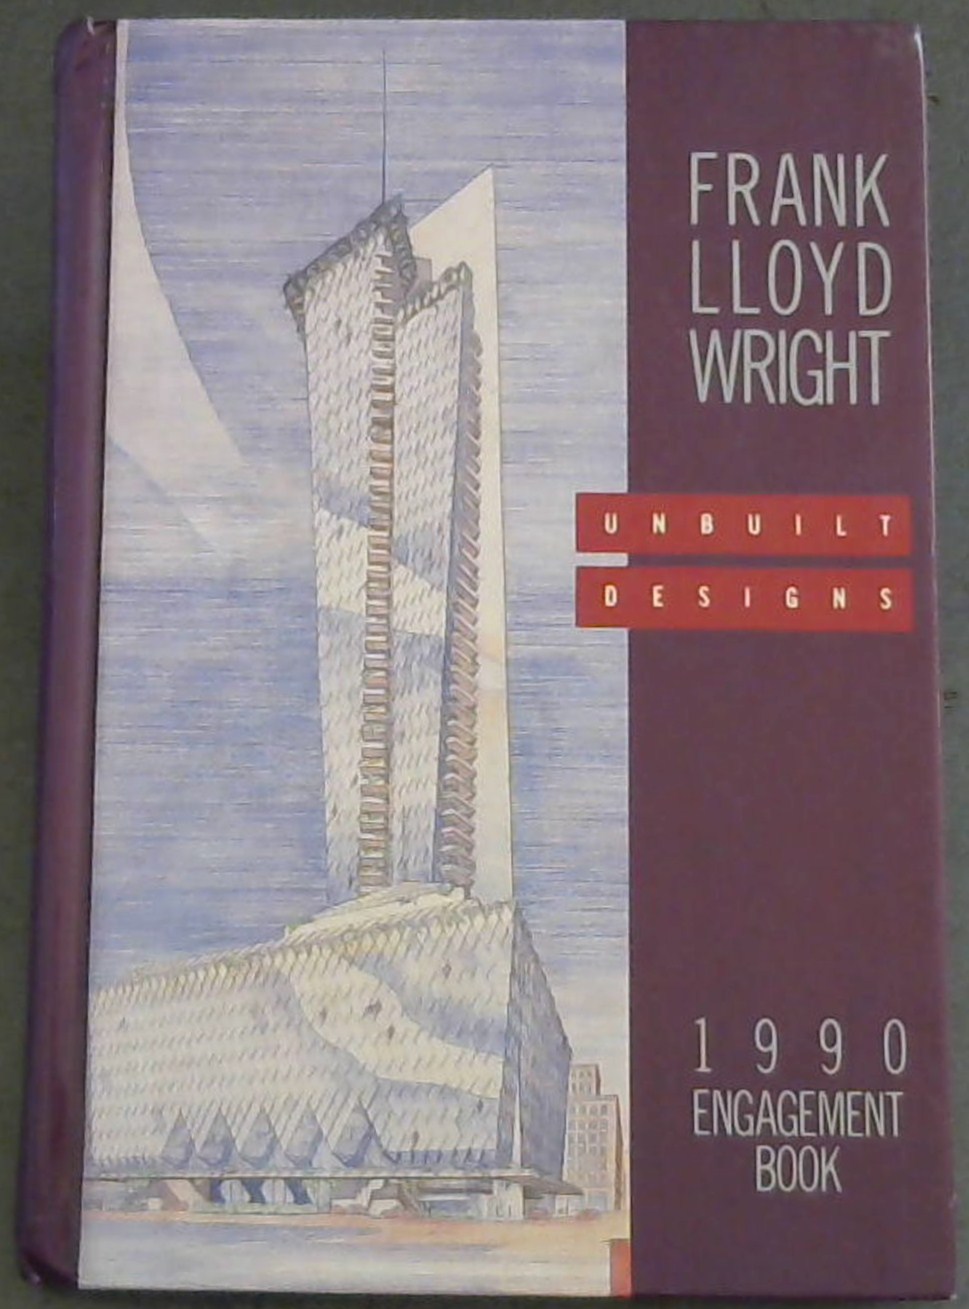 Frank Lloyd Wright Unbuilt Designs 1990 Engagement Book